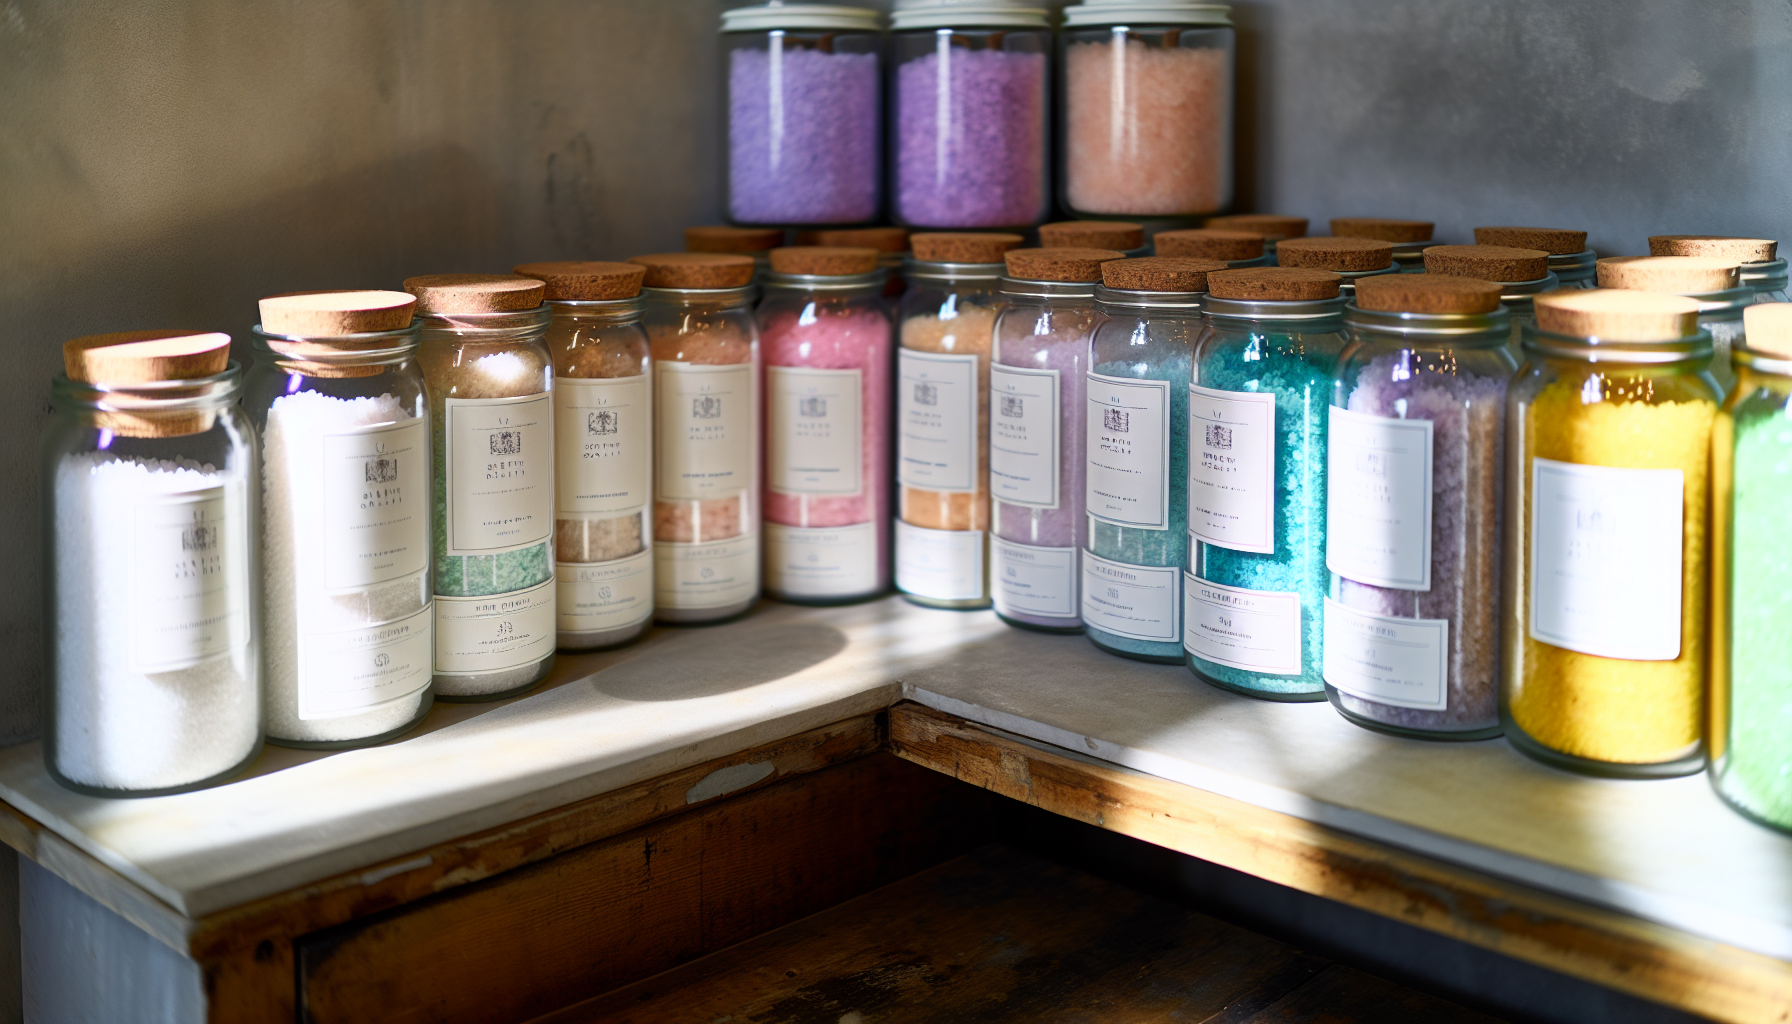 Assortment of popular bath salt and bath soak products neatly arranged on a shelf